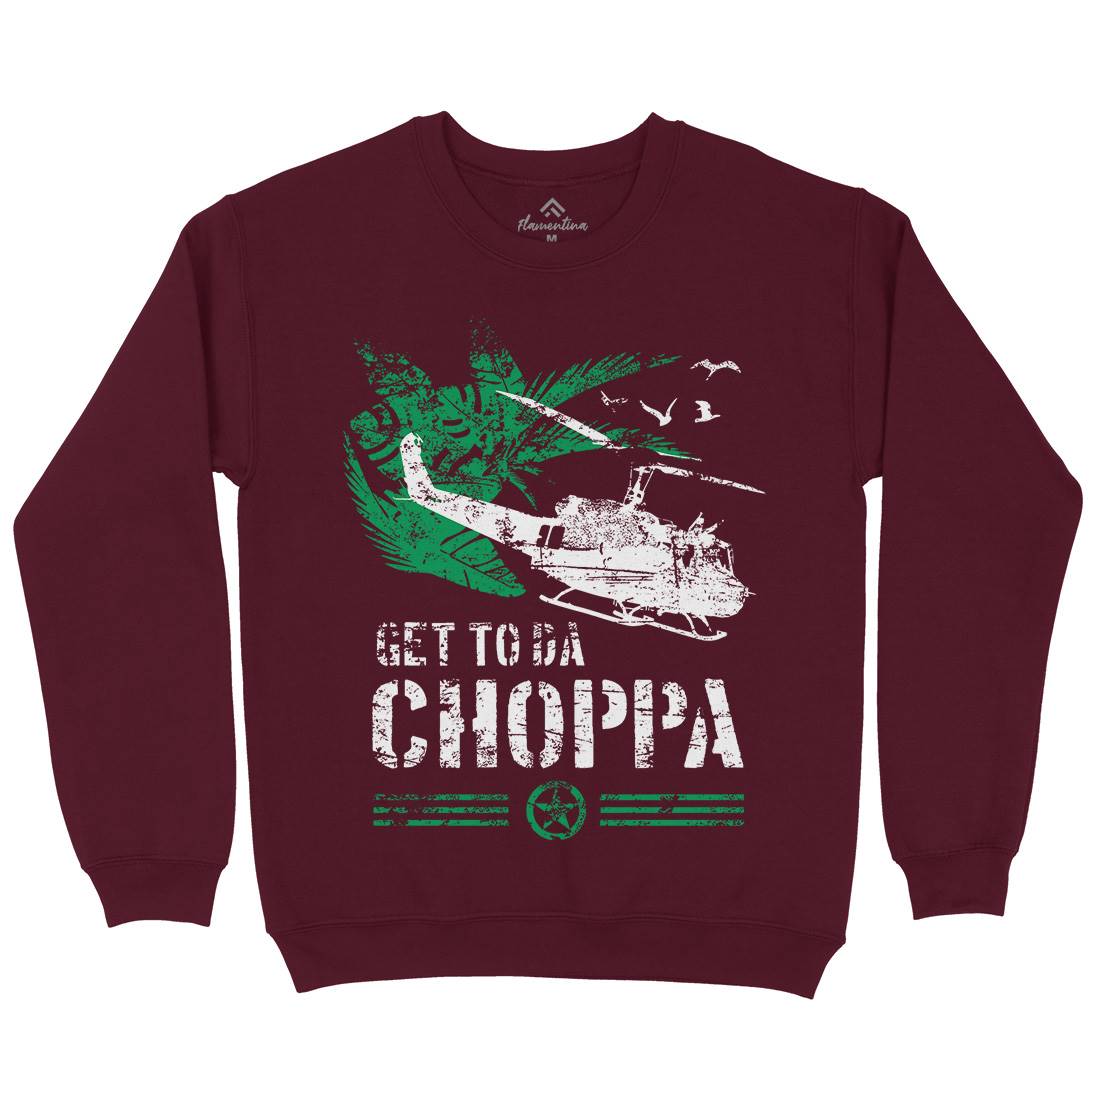 Get To The Chopper Kids Crew Neck Sweatshirt Army D235